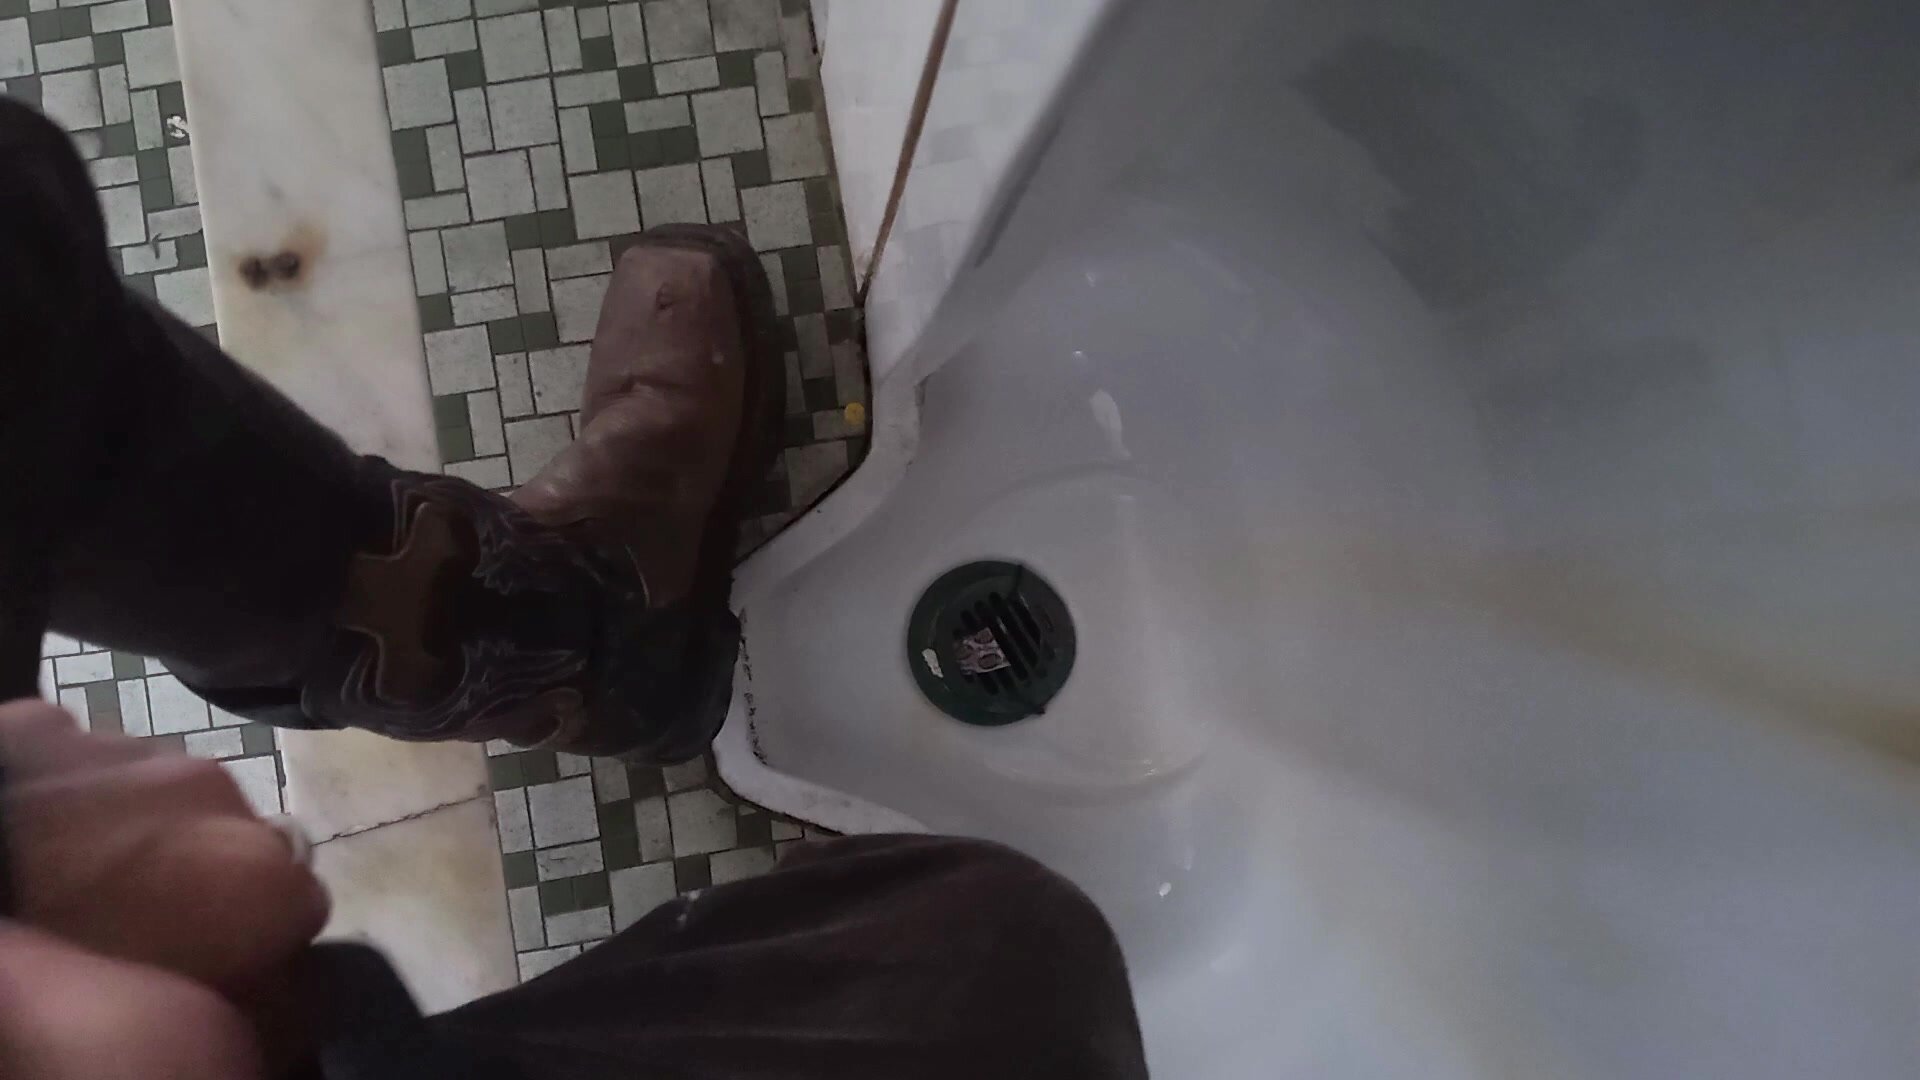 Public restroom jerk off - video 2